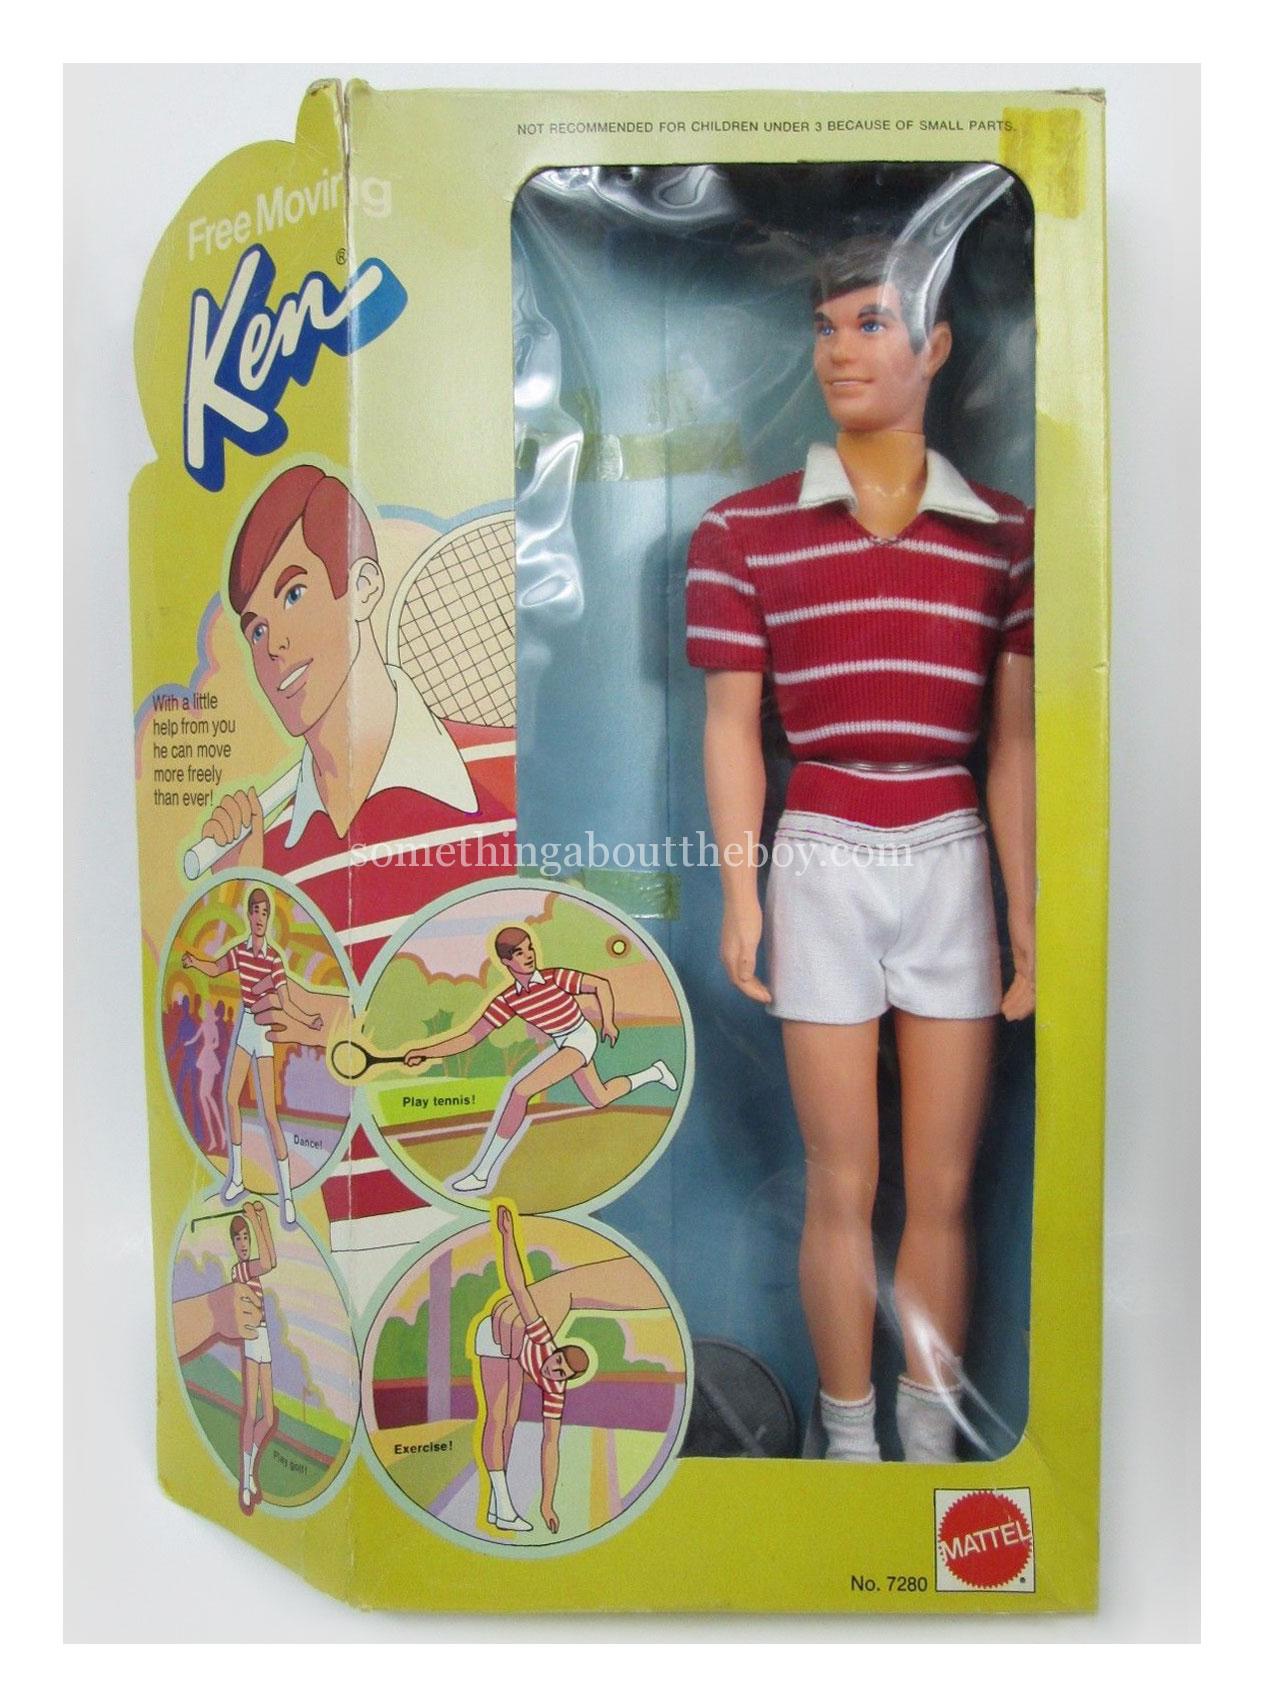 1975 #7280 Free Moving Ken in original packaging